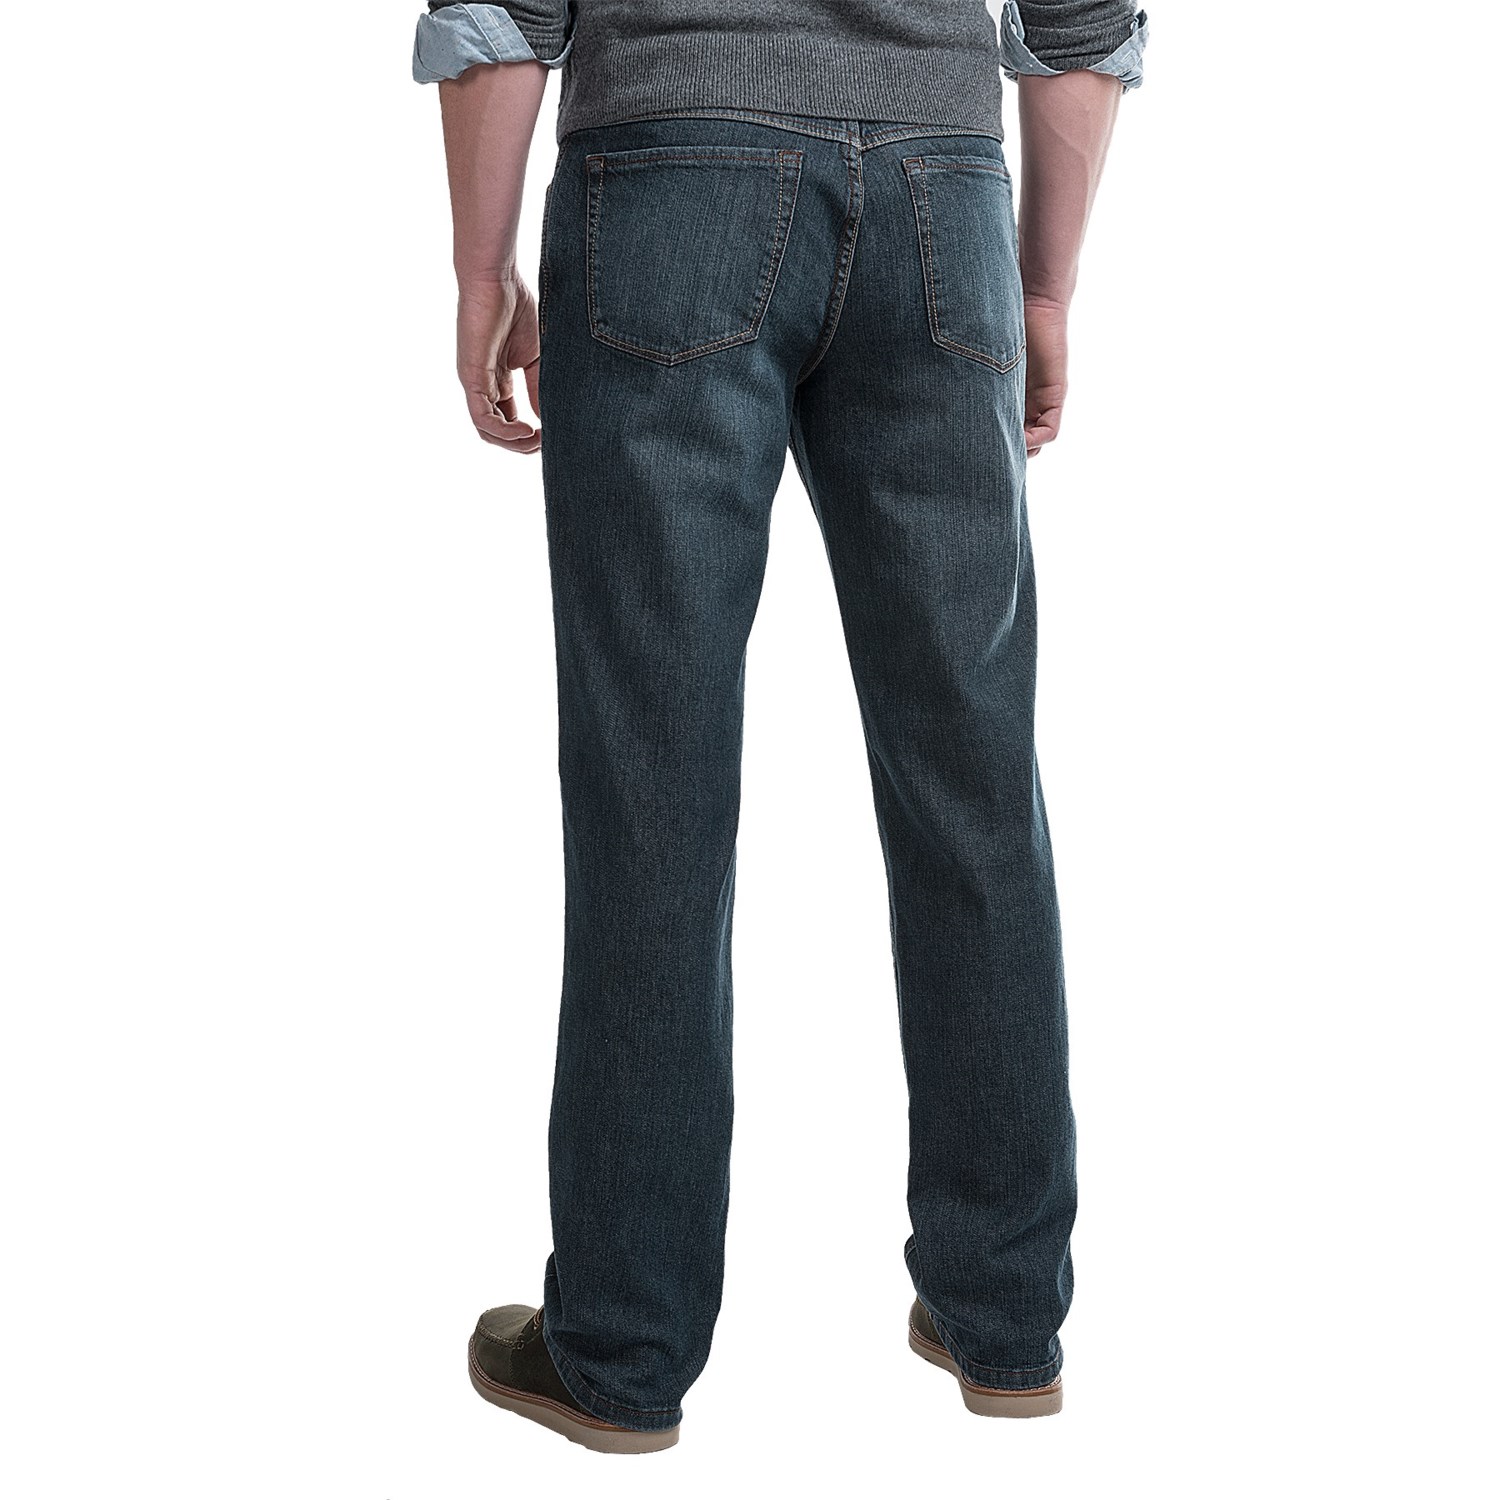 Hiltl Dude Jeans (For Men) - Save 54%